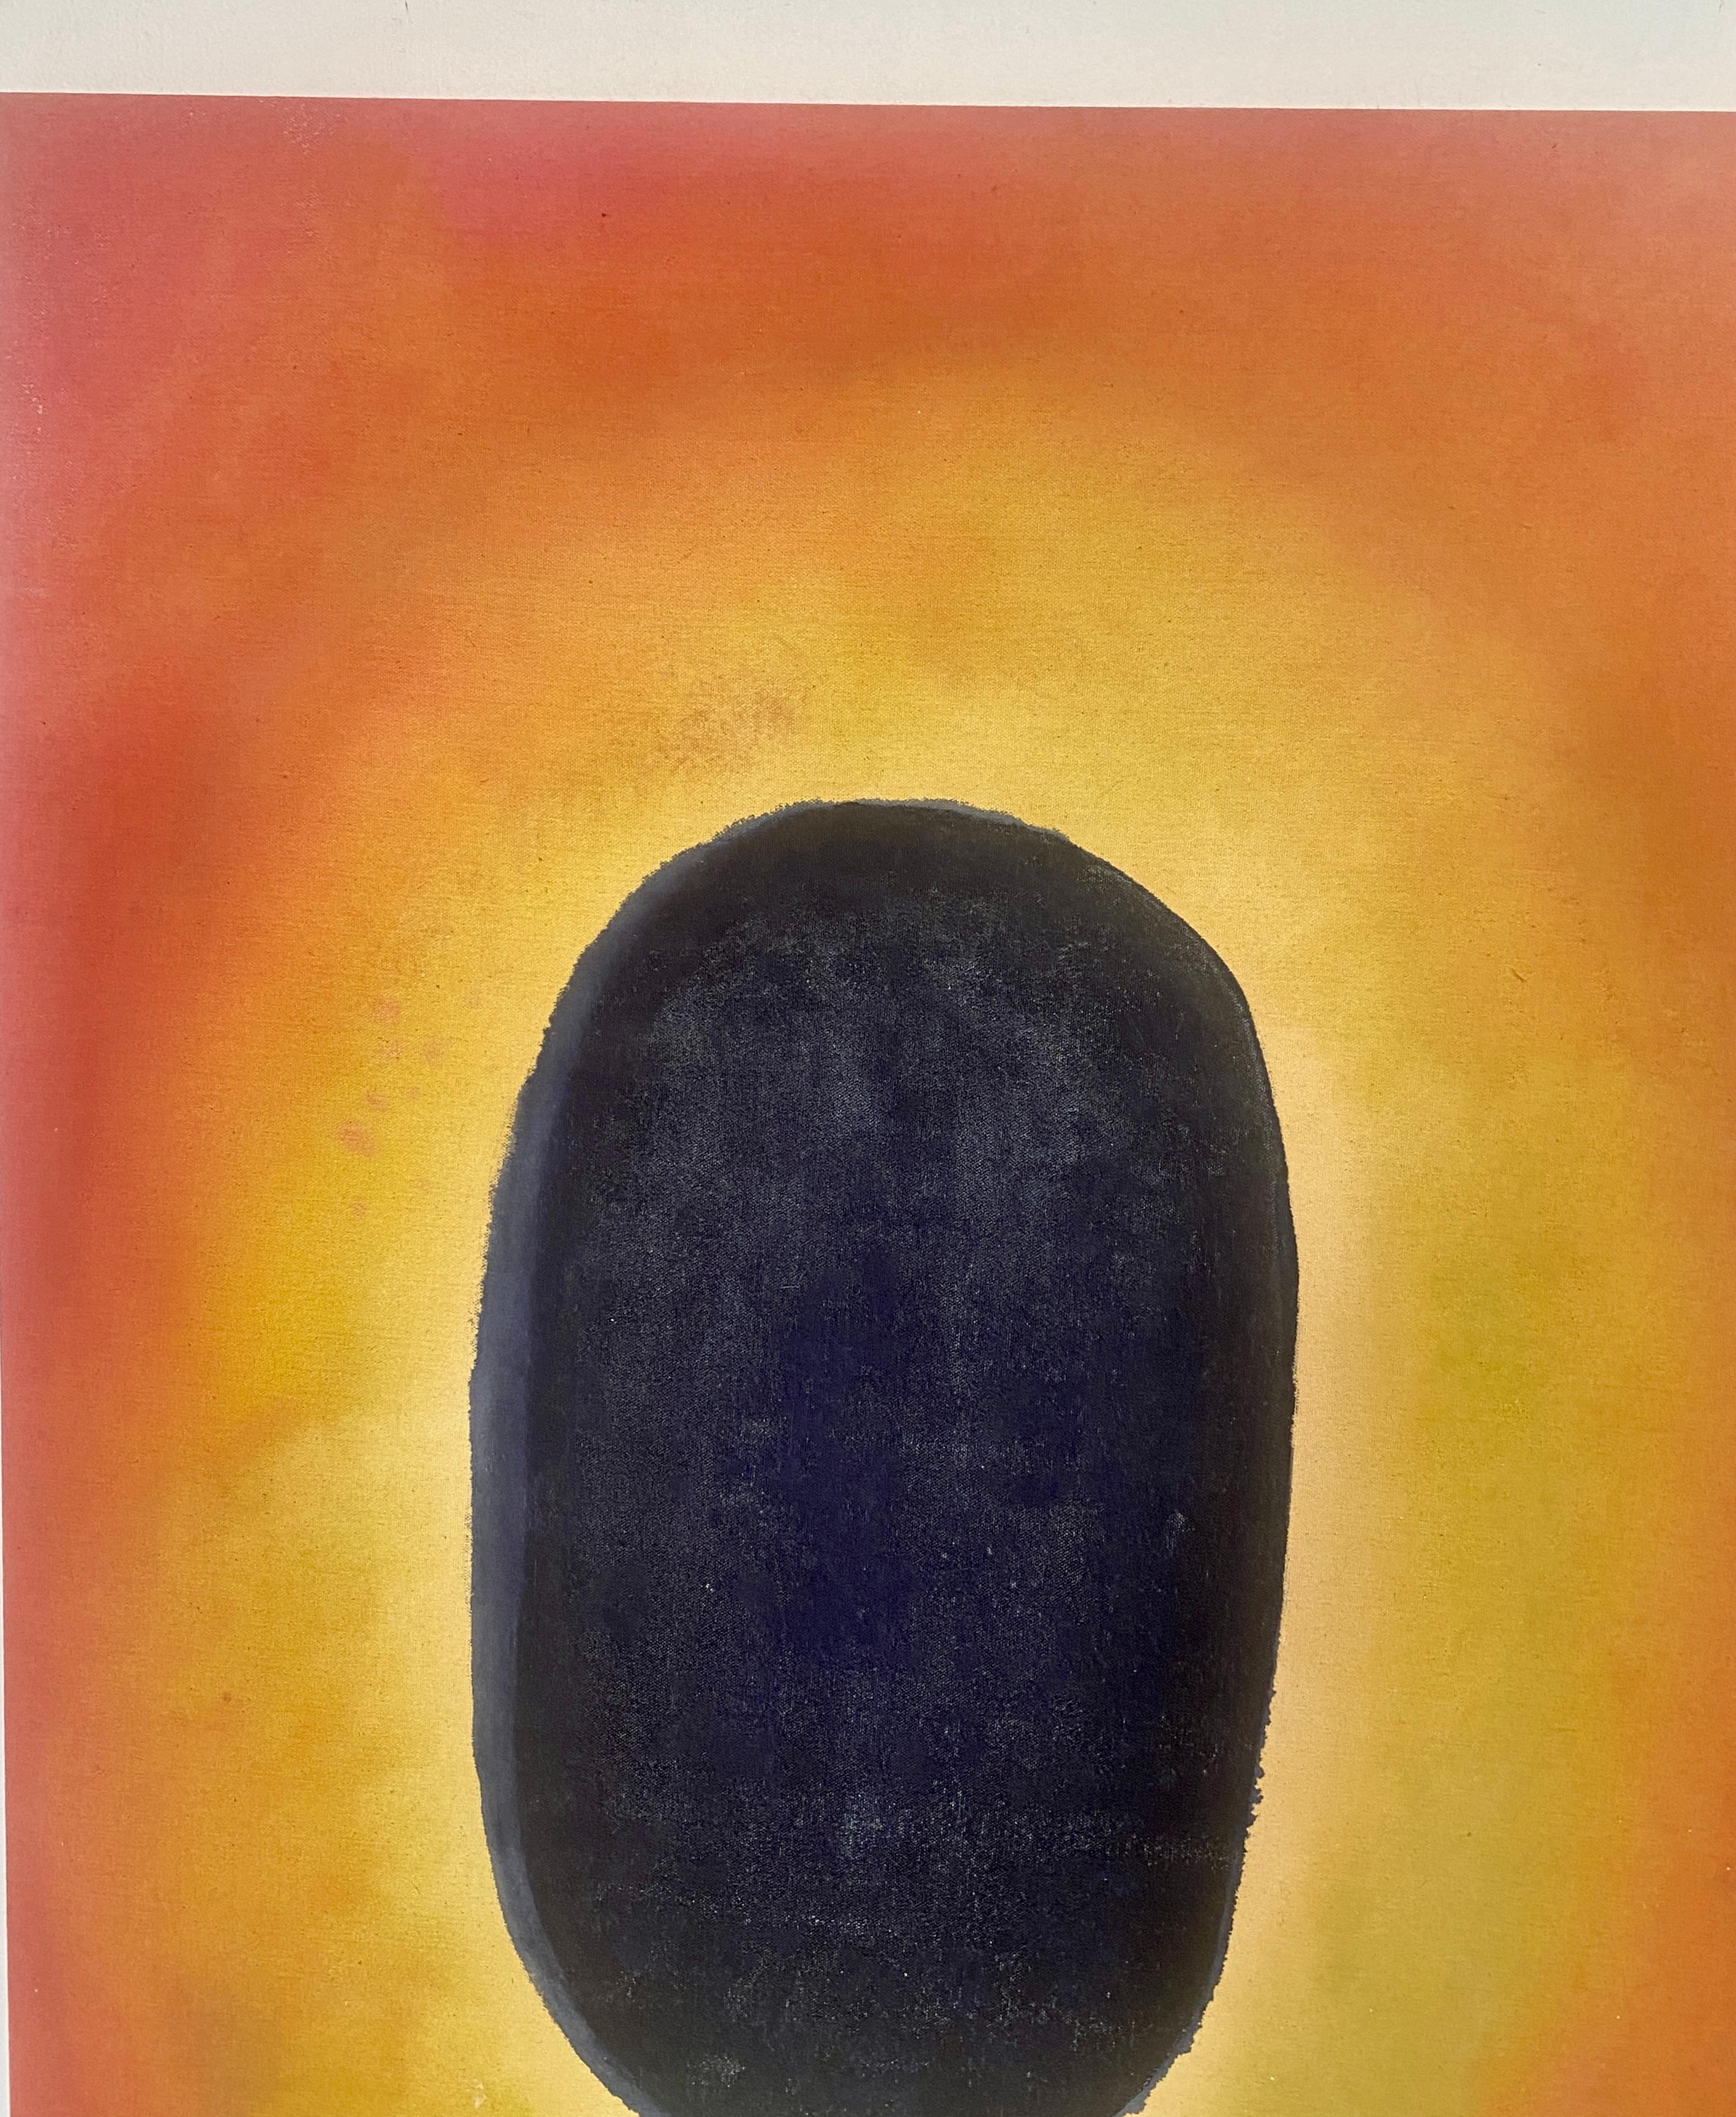 Glow Tantra painting #2- soak stain color-field abstract meditation painting - Color-Field Painting by Elisa Niva